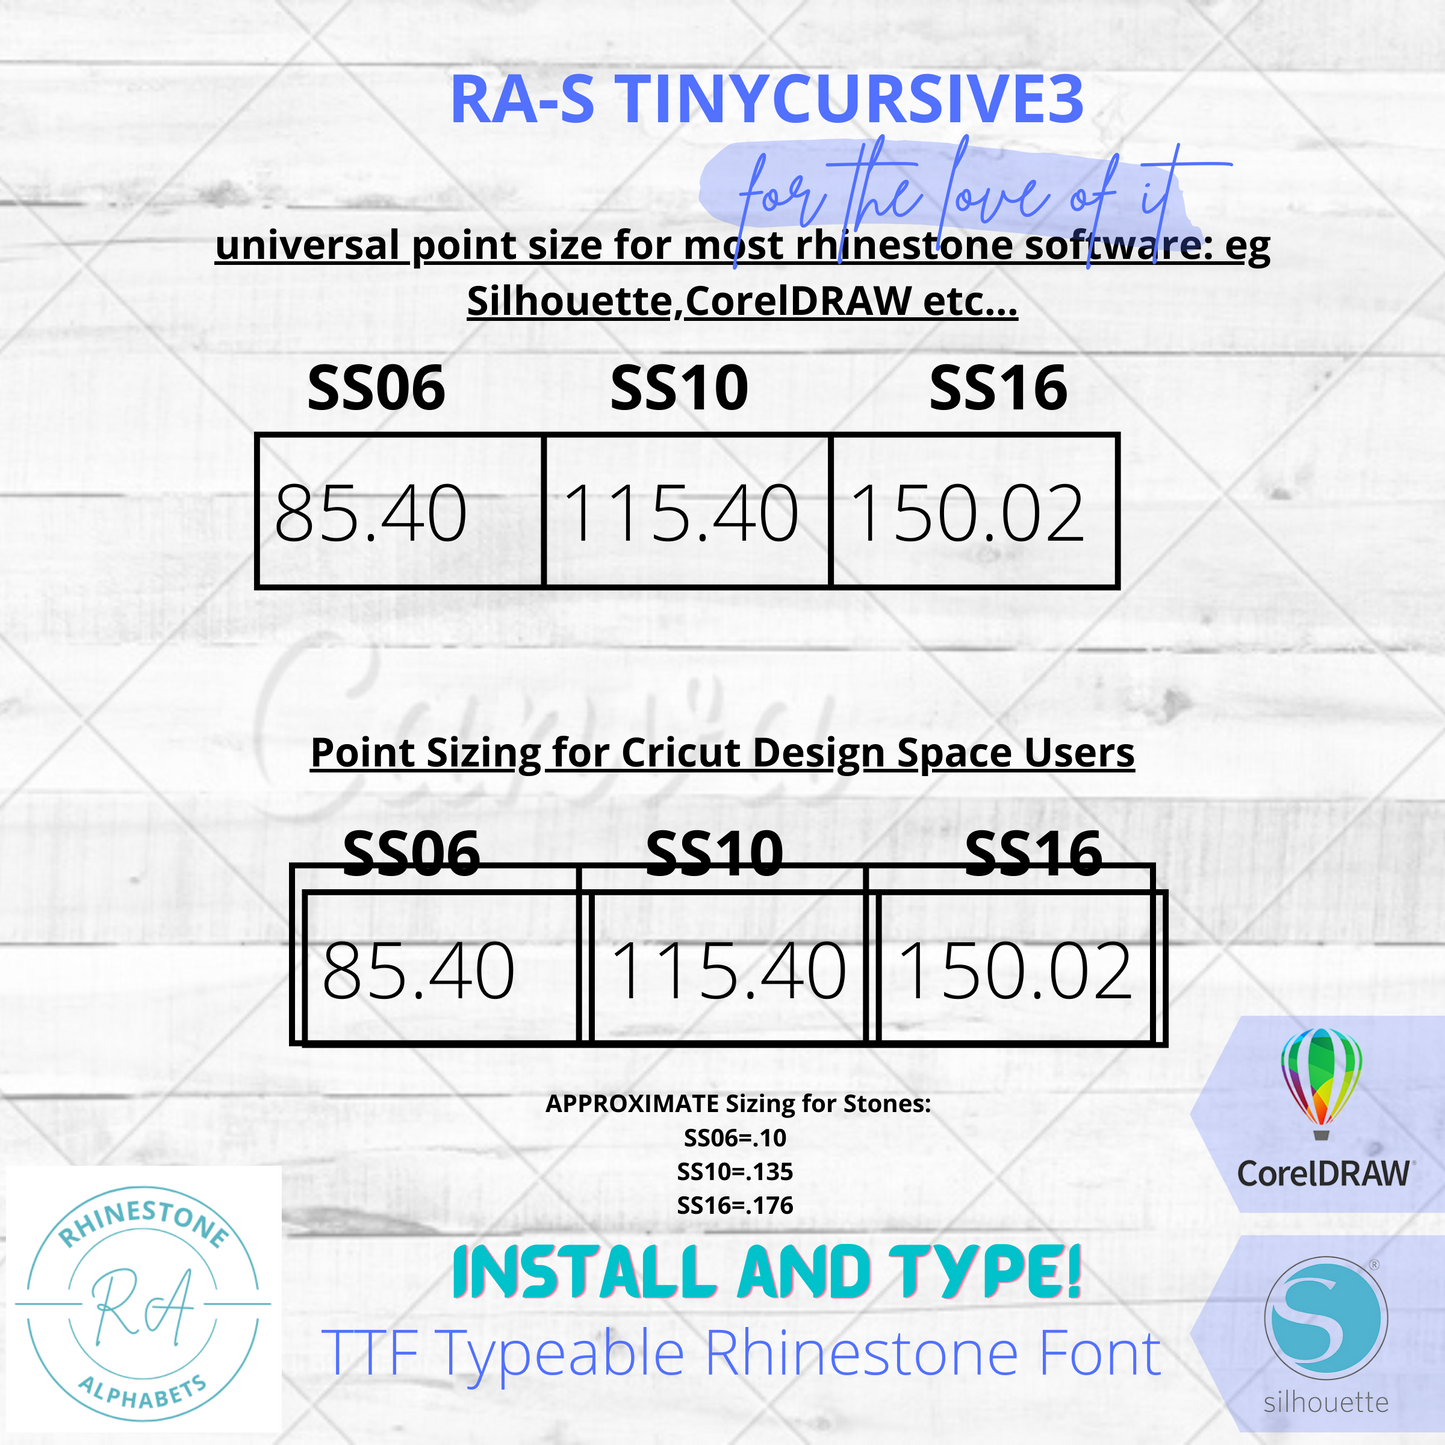 RA-S Tiny Cursive 3 :TTF Typeable Rhinestone Font